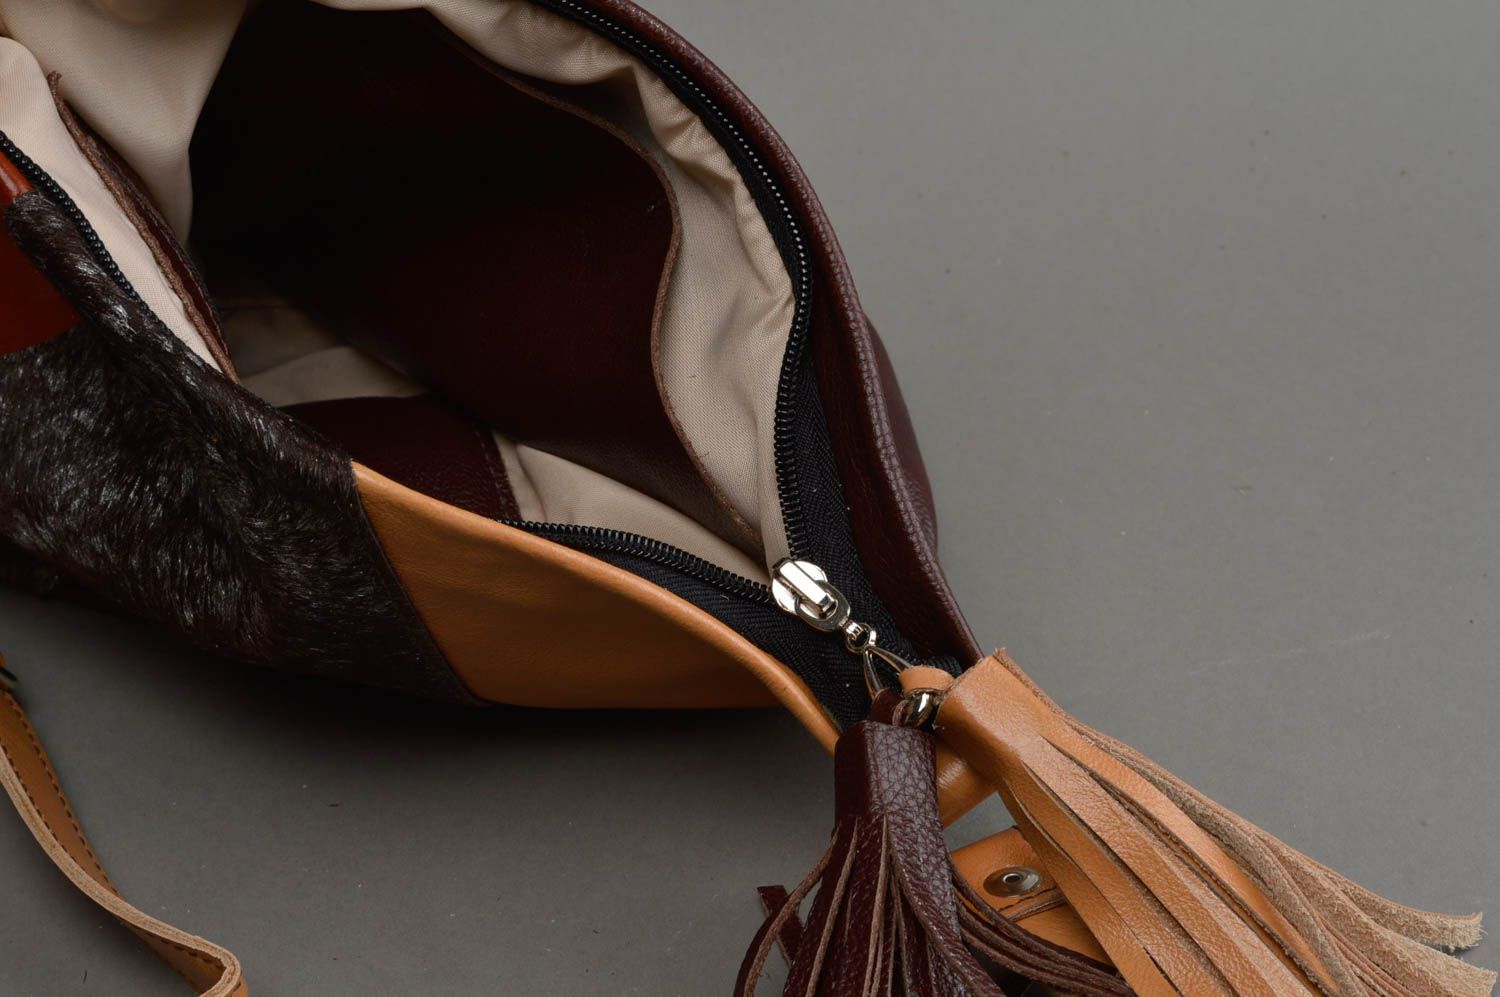 Unusual handcrafted leather handbag leather shoulder bag designs gifts for her photo 4